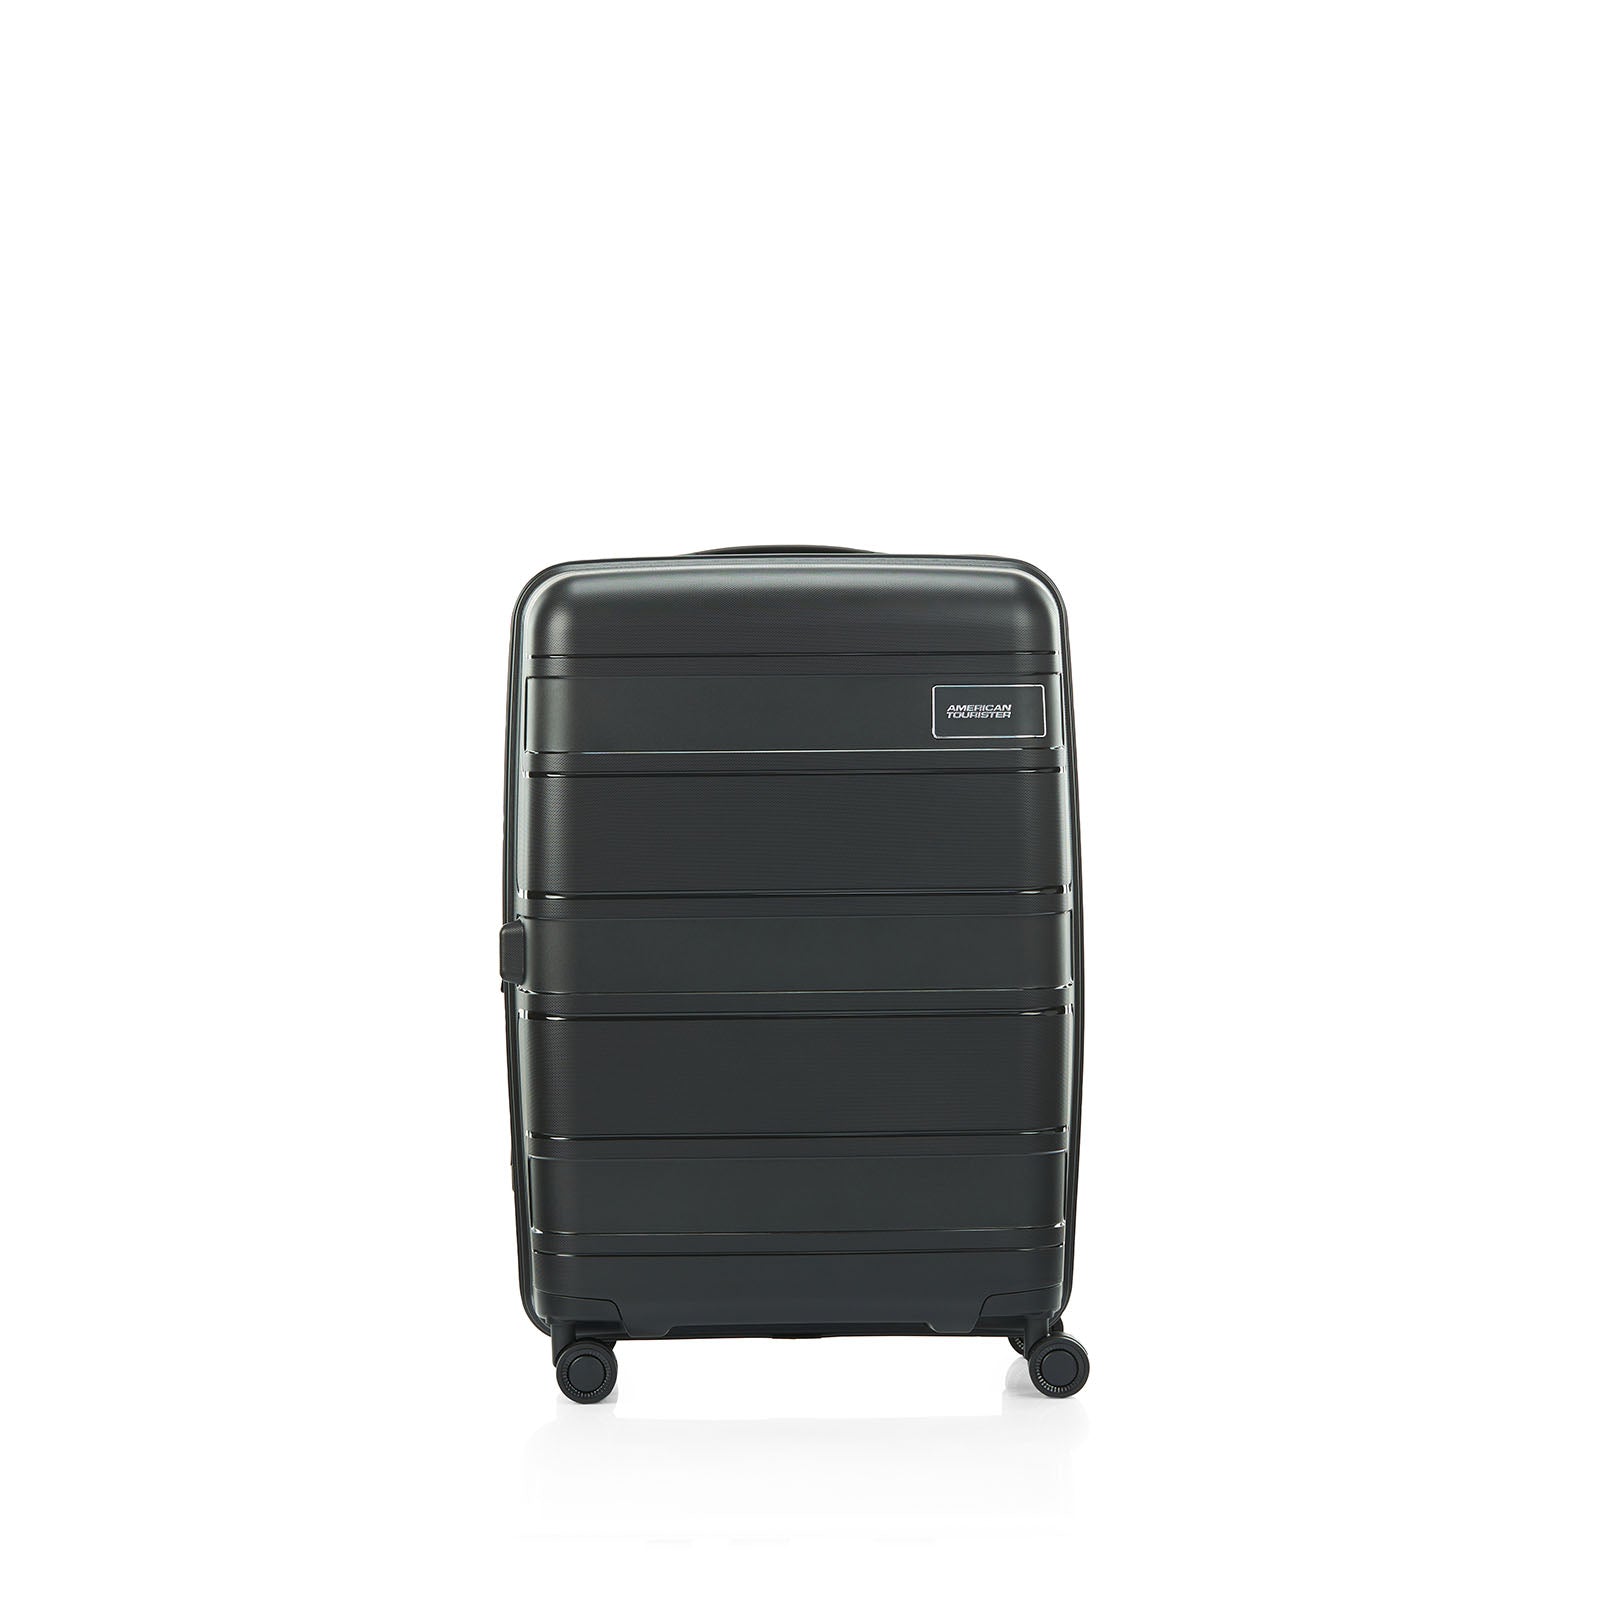 American-Tourister-Light-Max-69cm-Suitcase-Black-Front